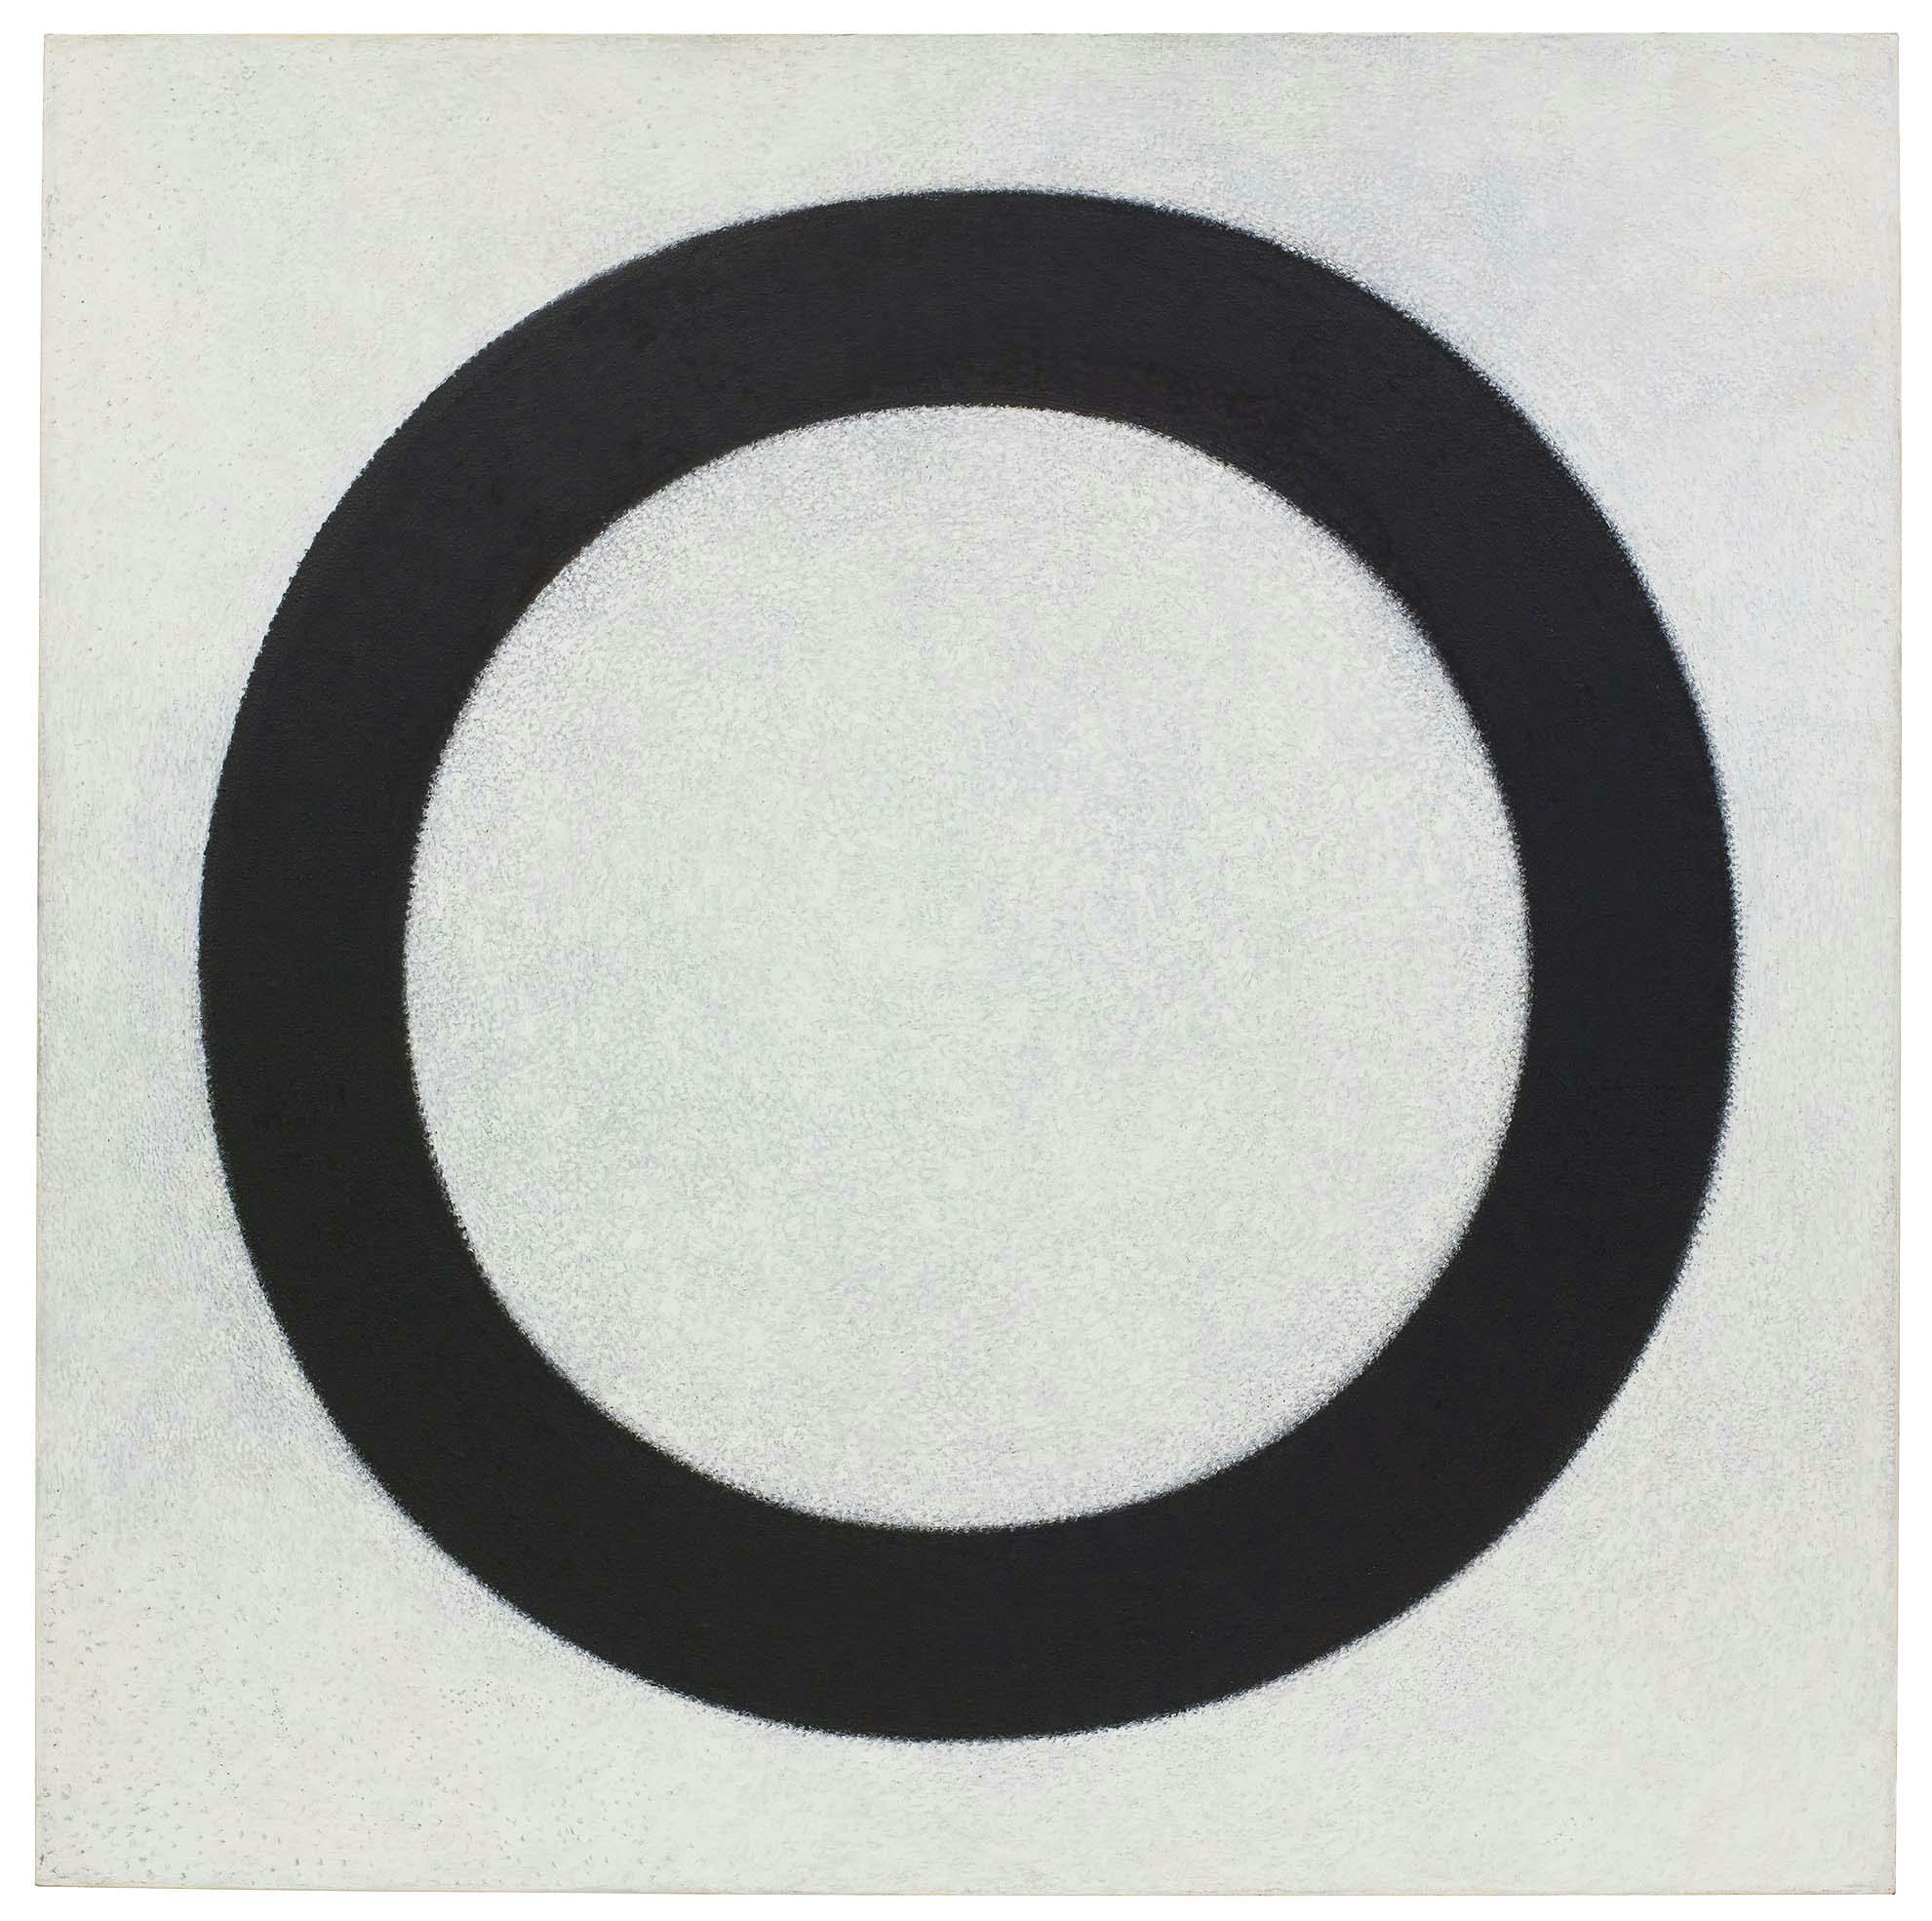 Black Circle, Time
1979–80
Oil on linen
90 x 90 in. (228.6 x 228.6 cm)
 – The Richard Pousette-Dart Foundation